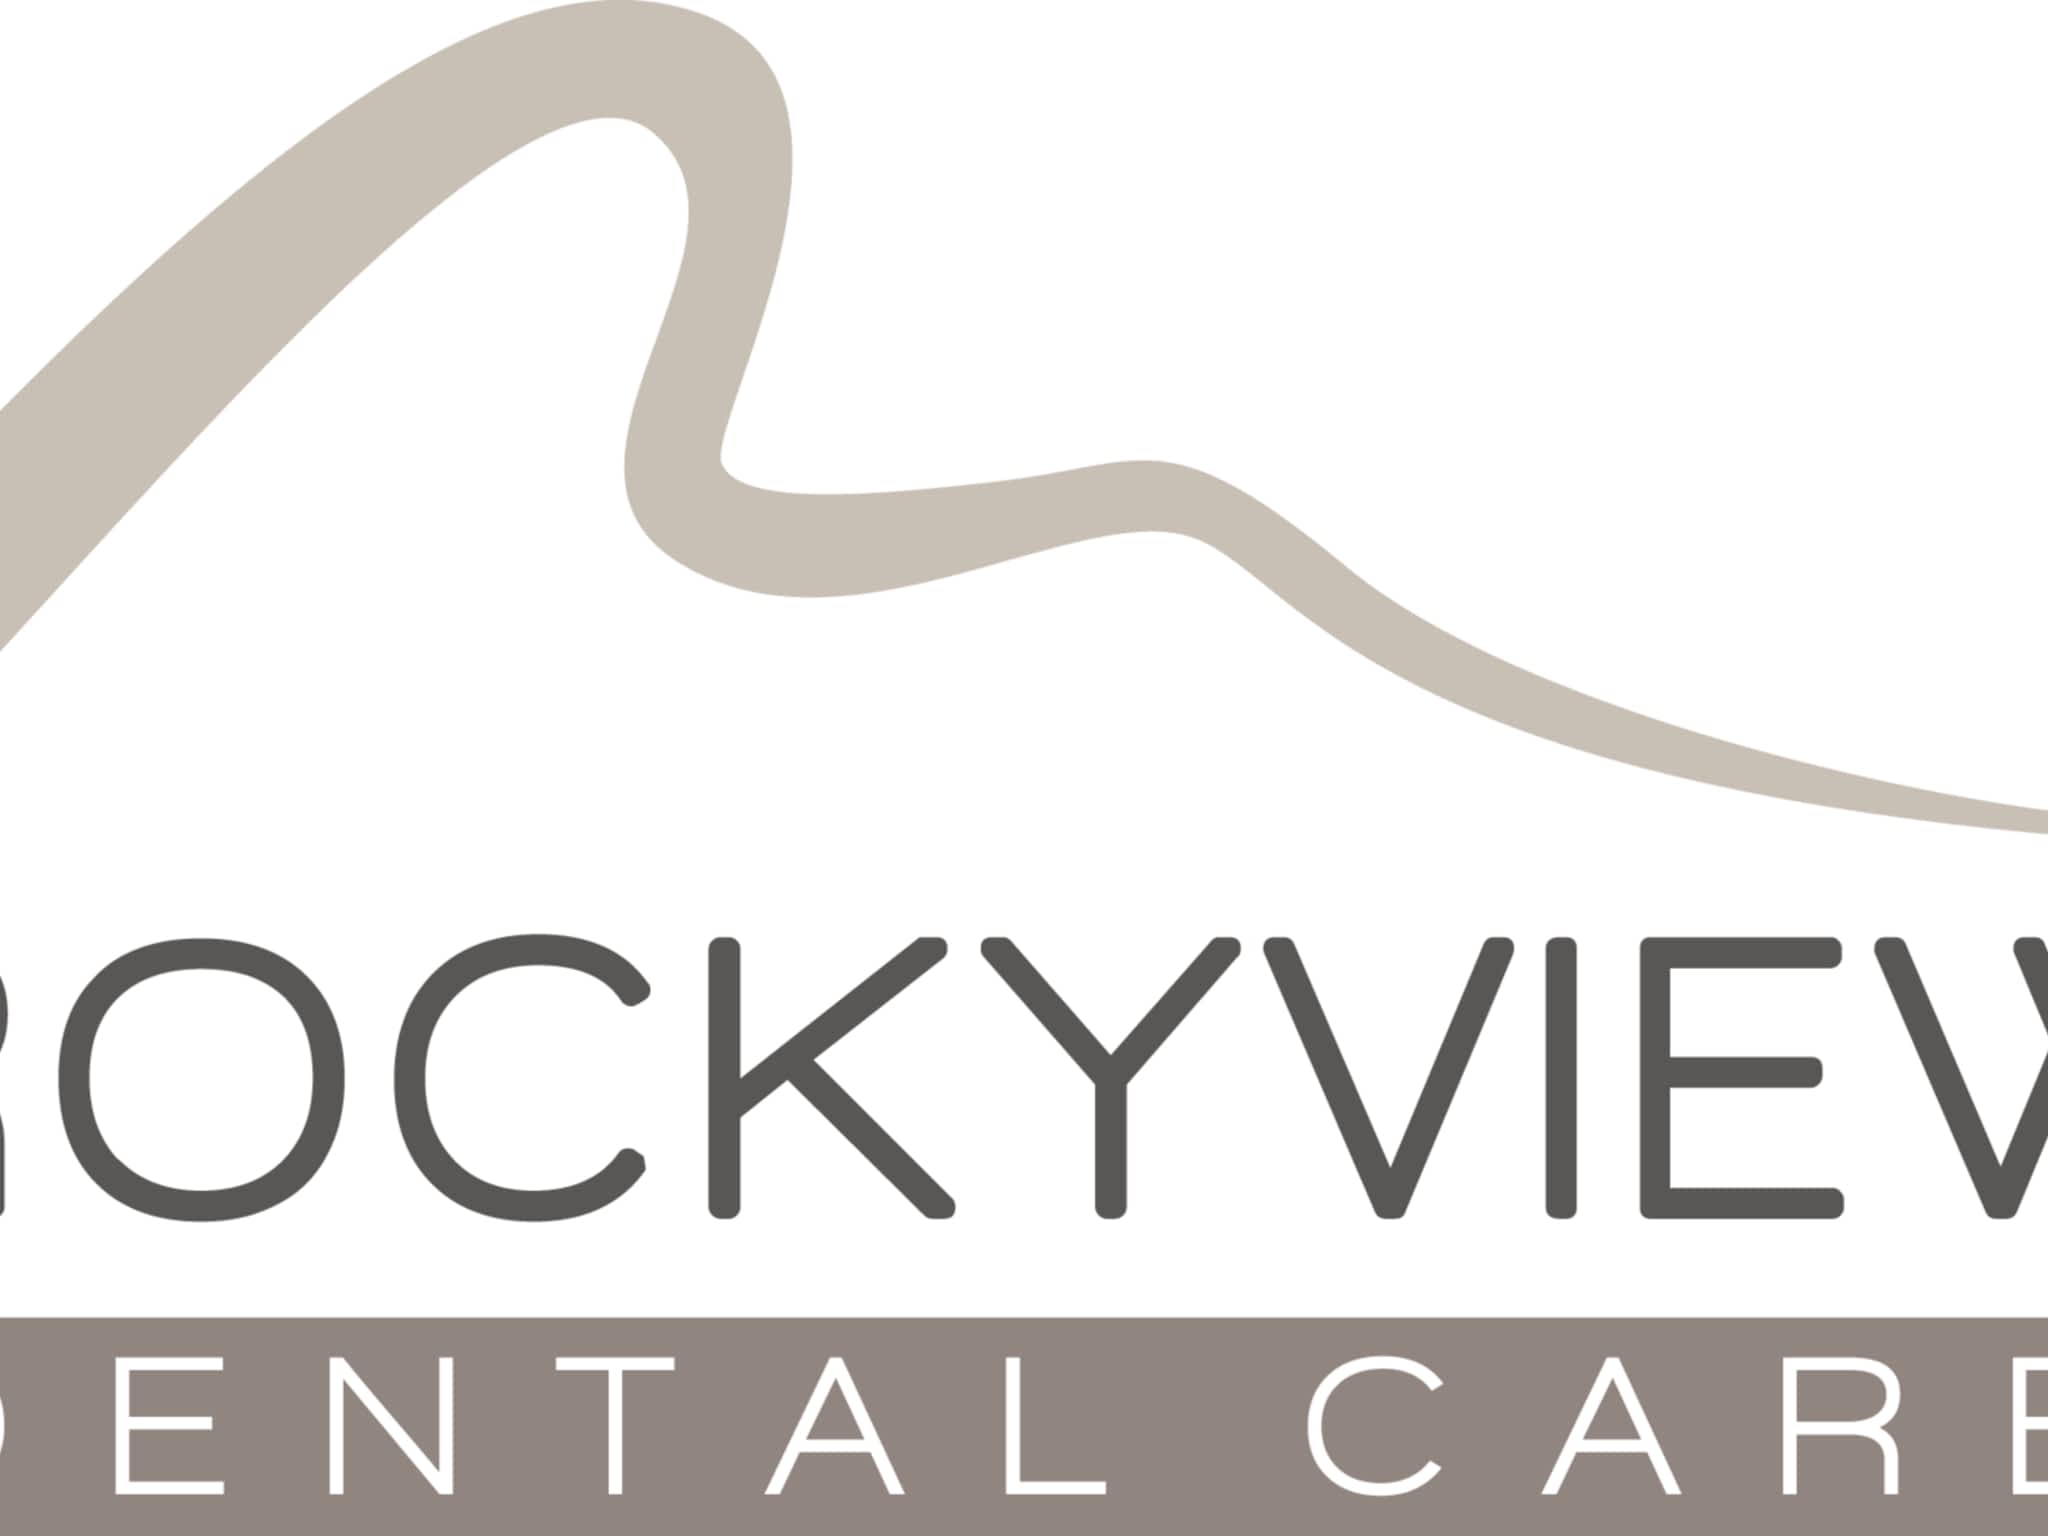 photo Rockyview Dental Care